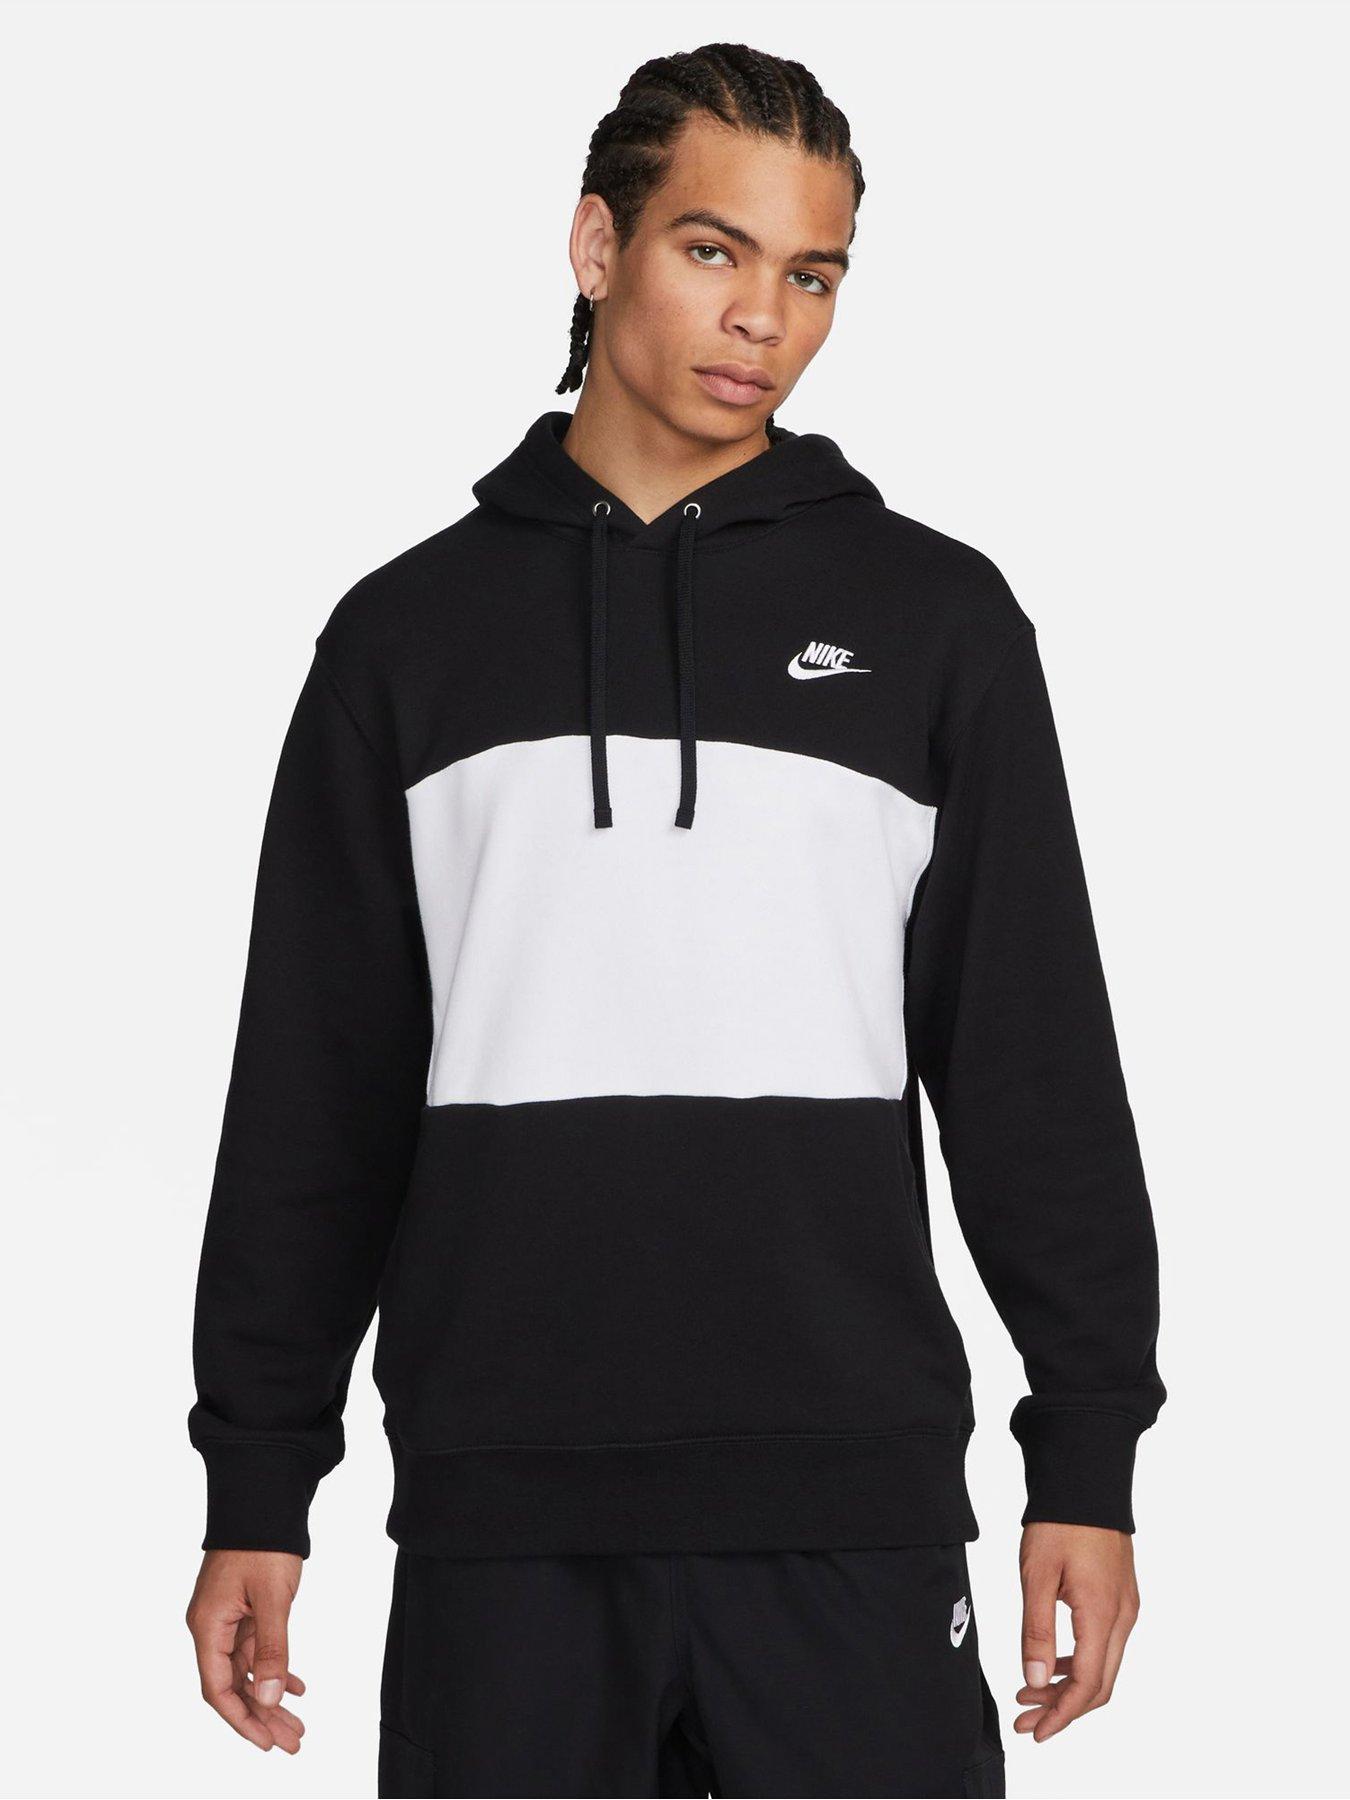 Adidas Hoodie Sweatshirt Boys Medium Black Long Sleeve Silver Drip Logo  Pocket